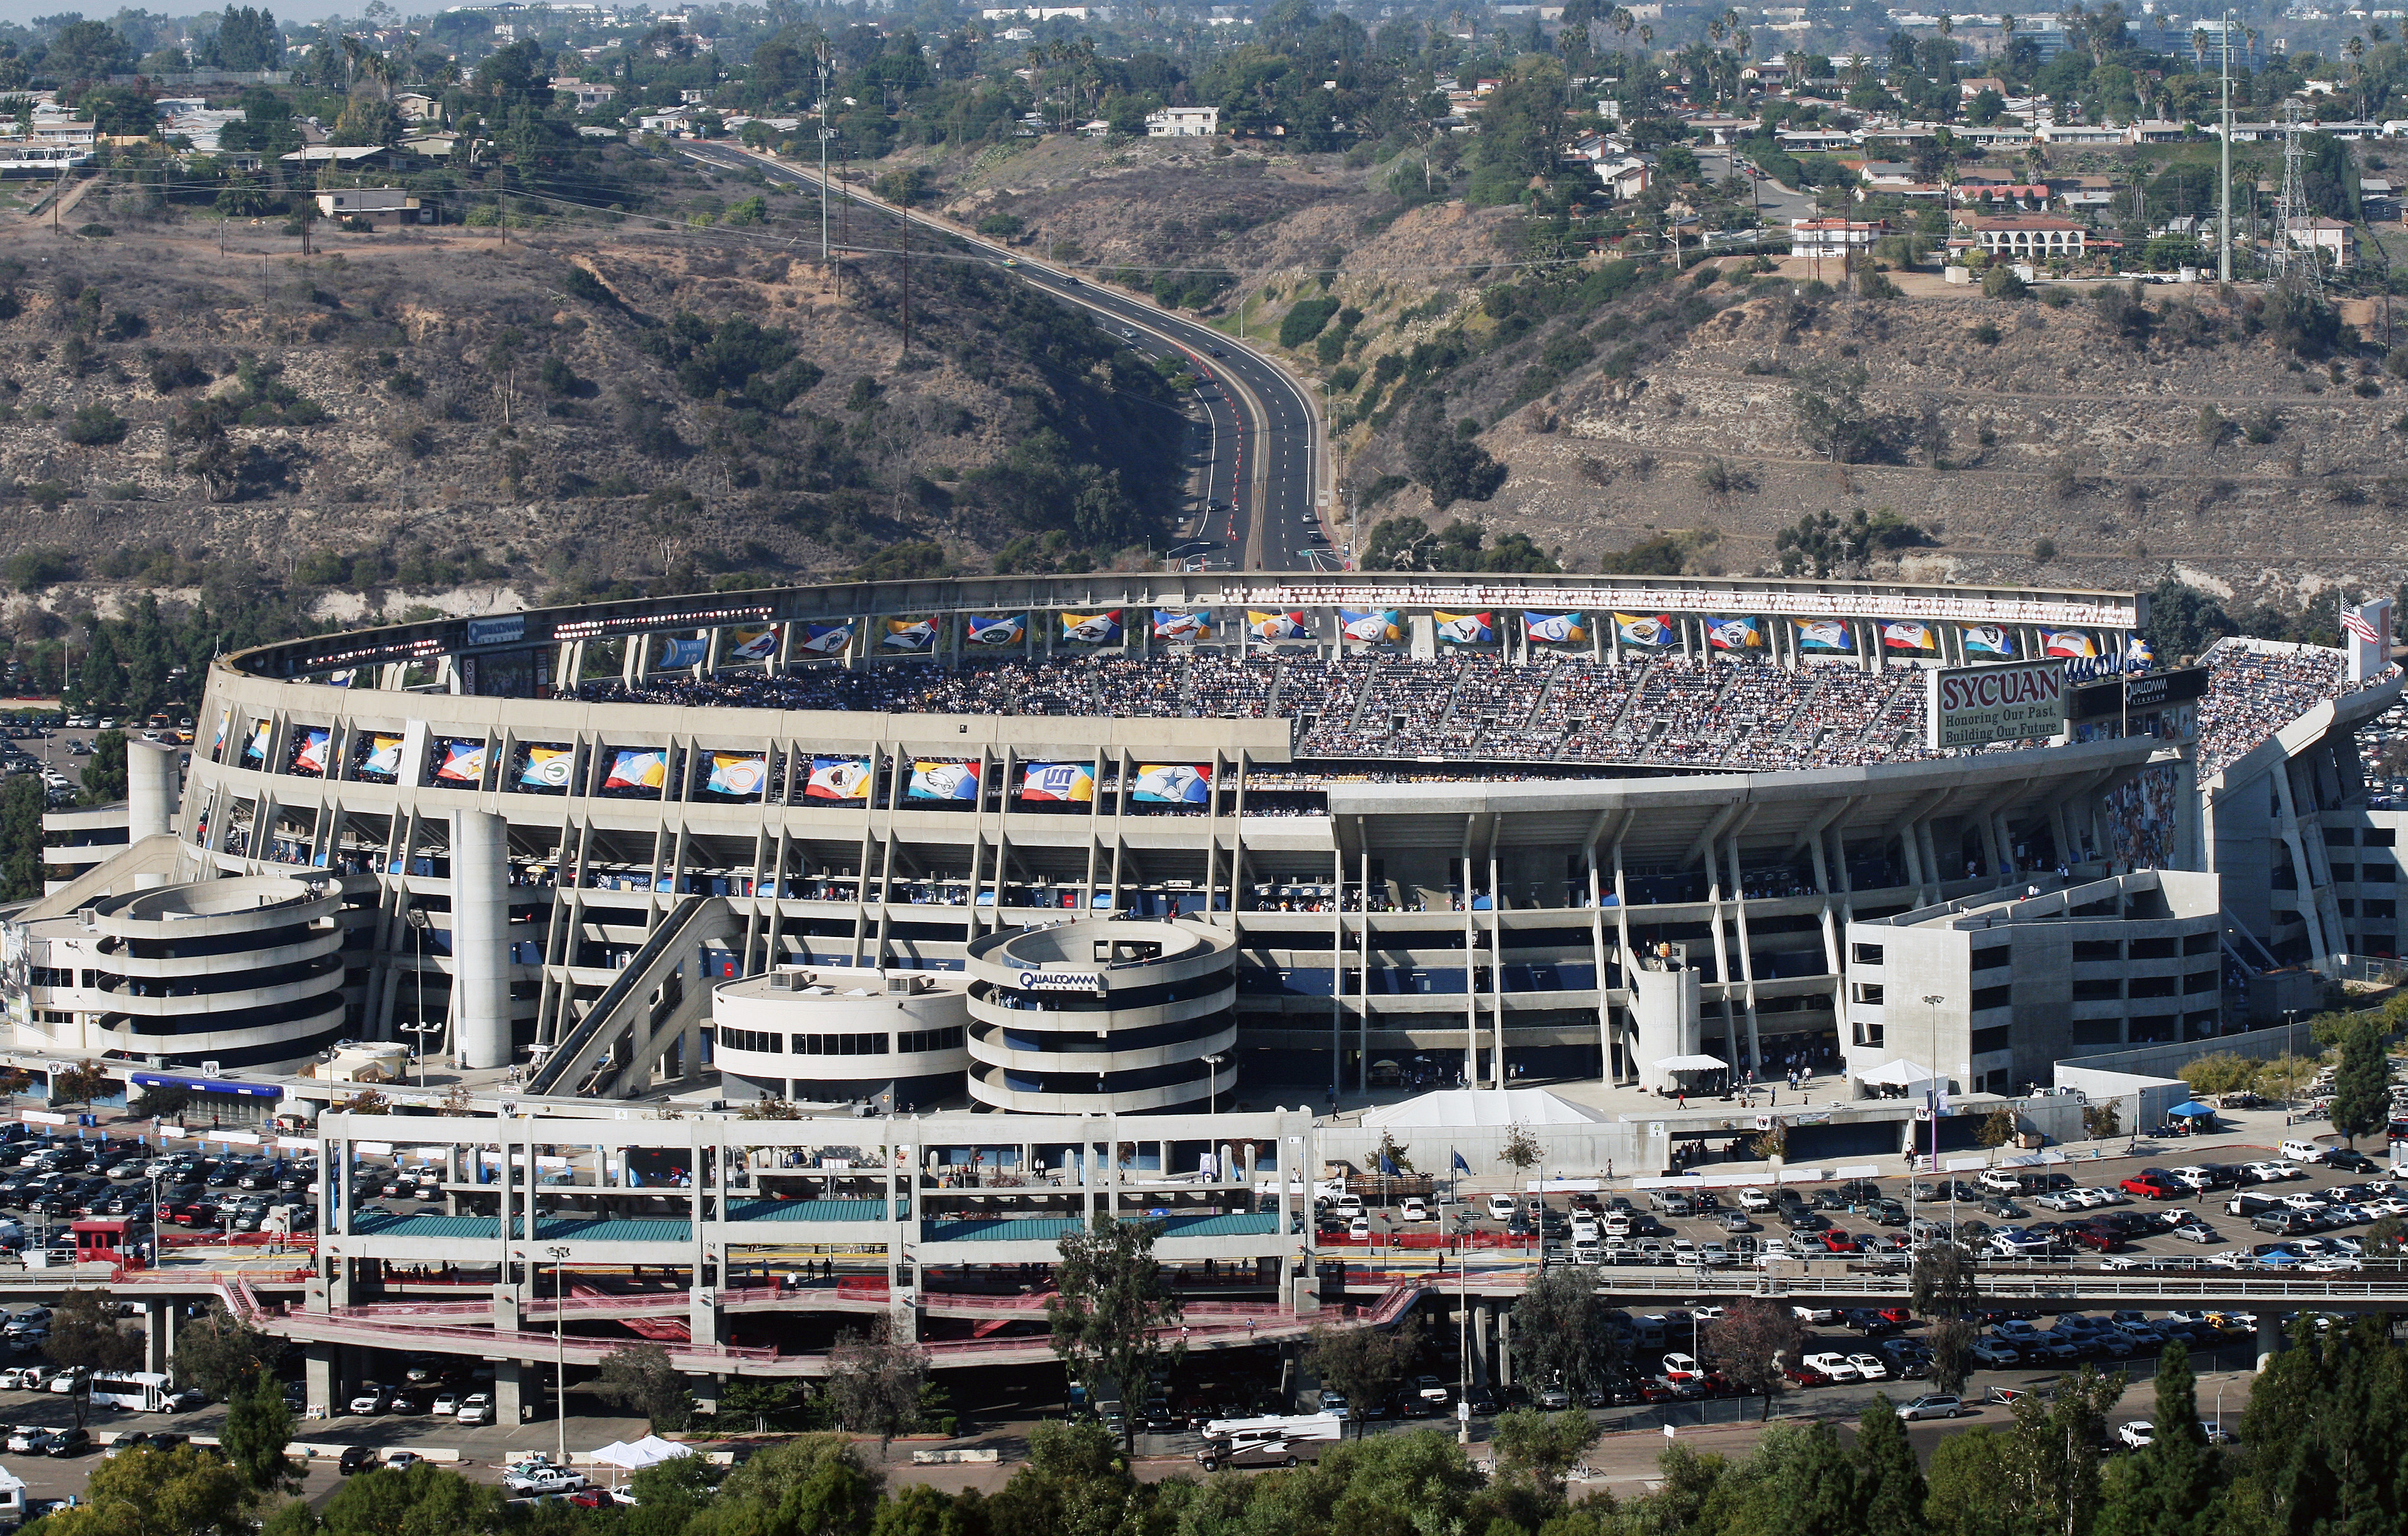 Qualcomm Stadium in San Diego's Mission Valley